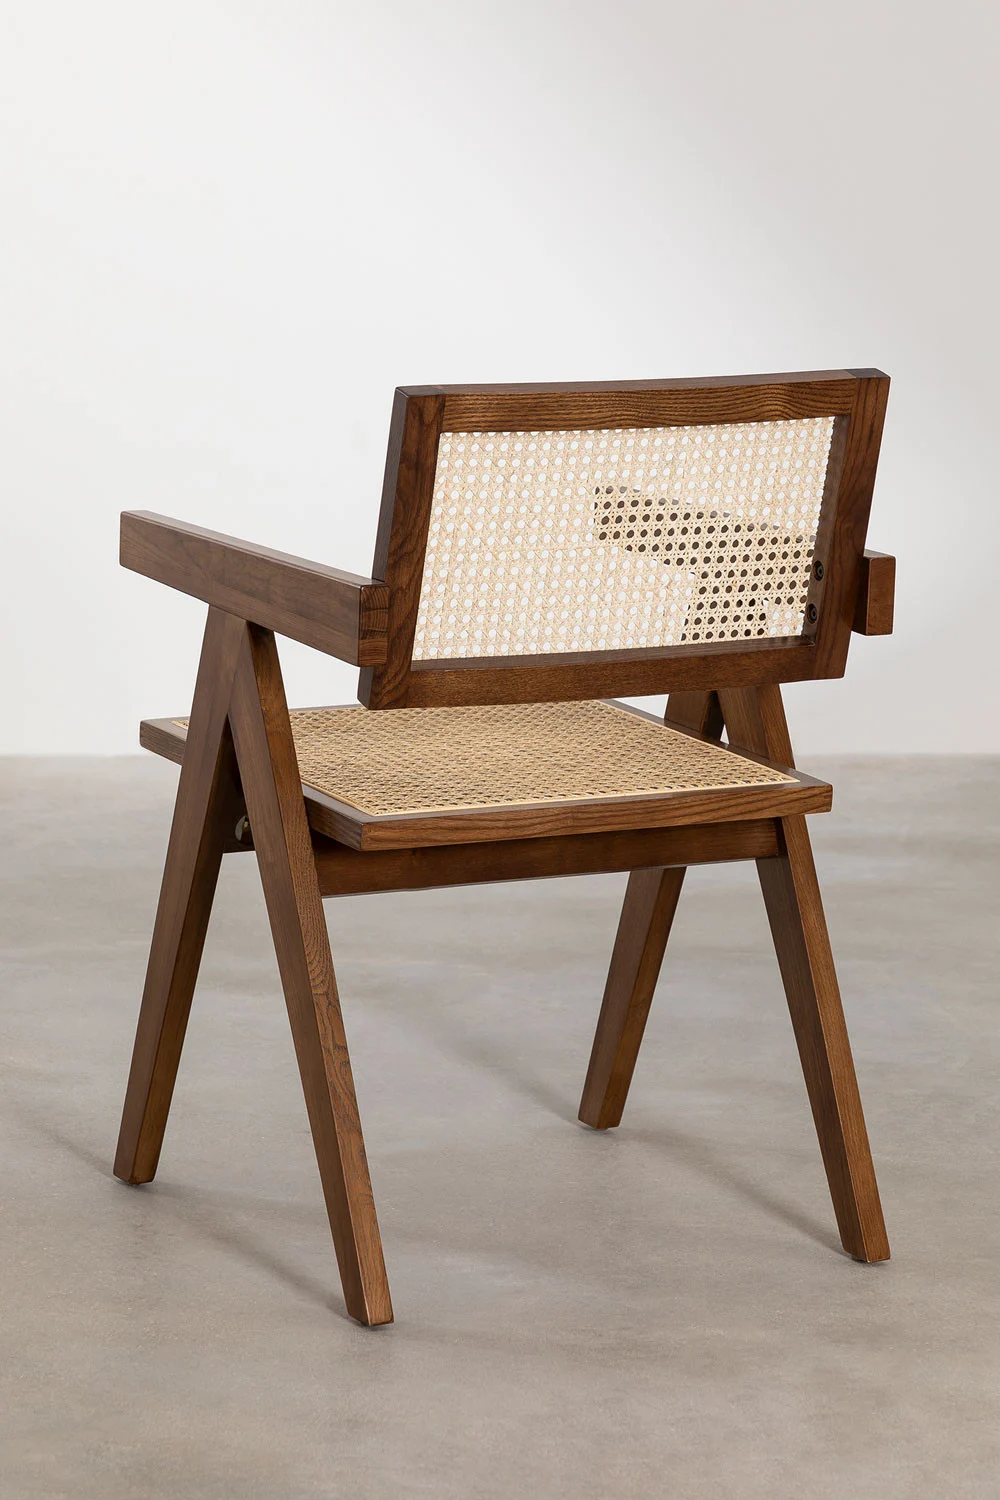 silla-con-reposabrazos-en-madera-lali-style (1)